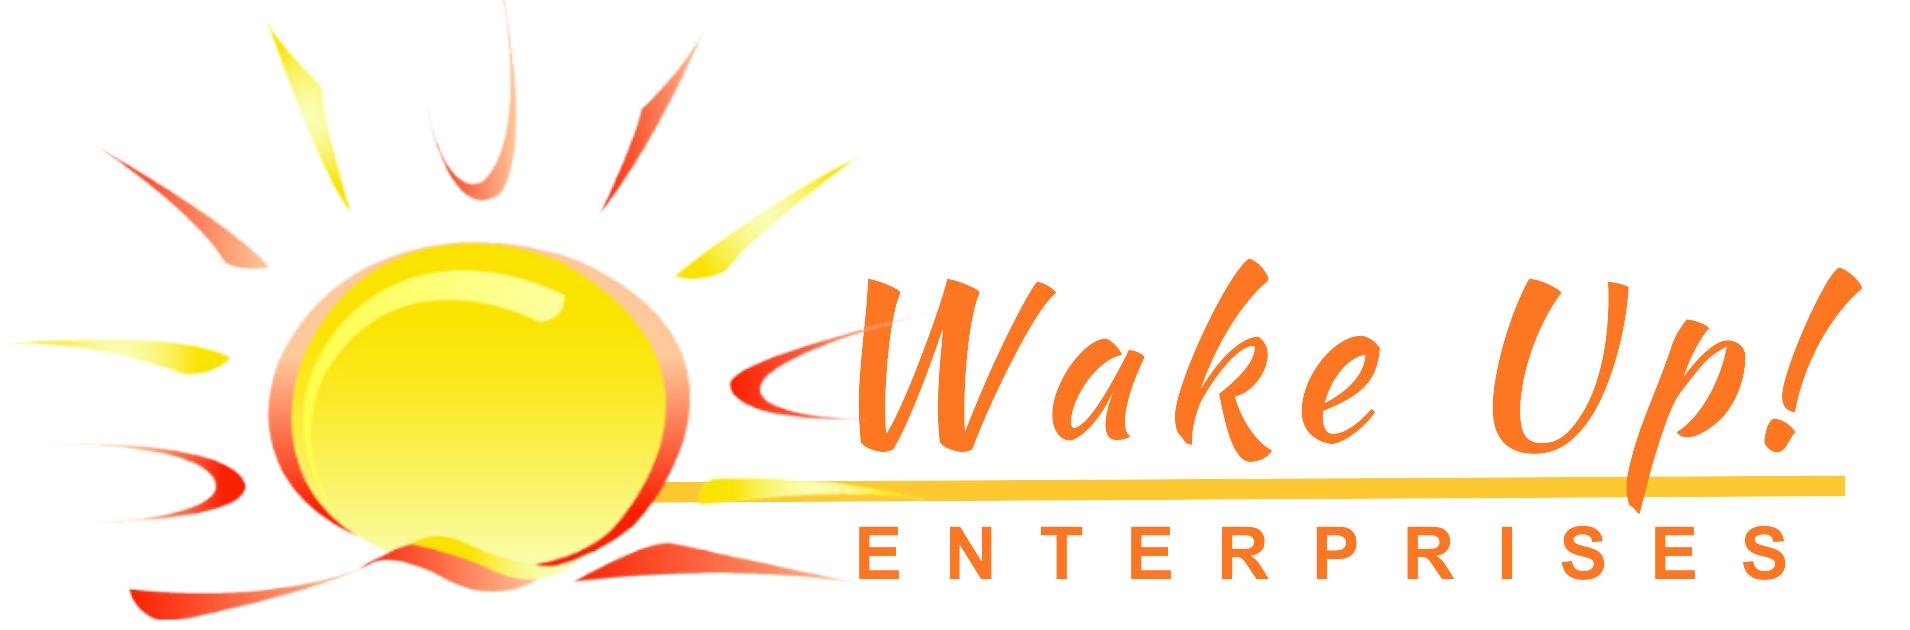 Wake Up! Enterprises